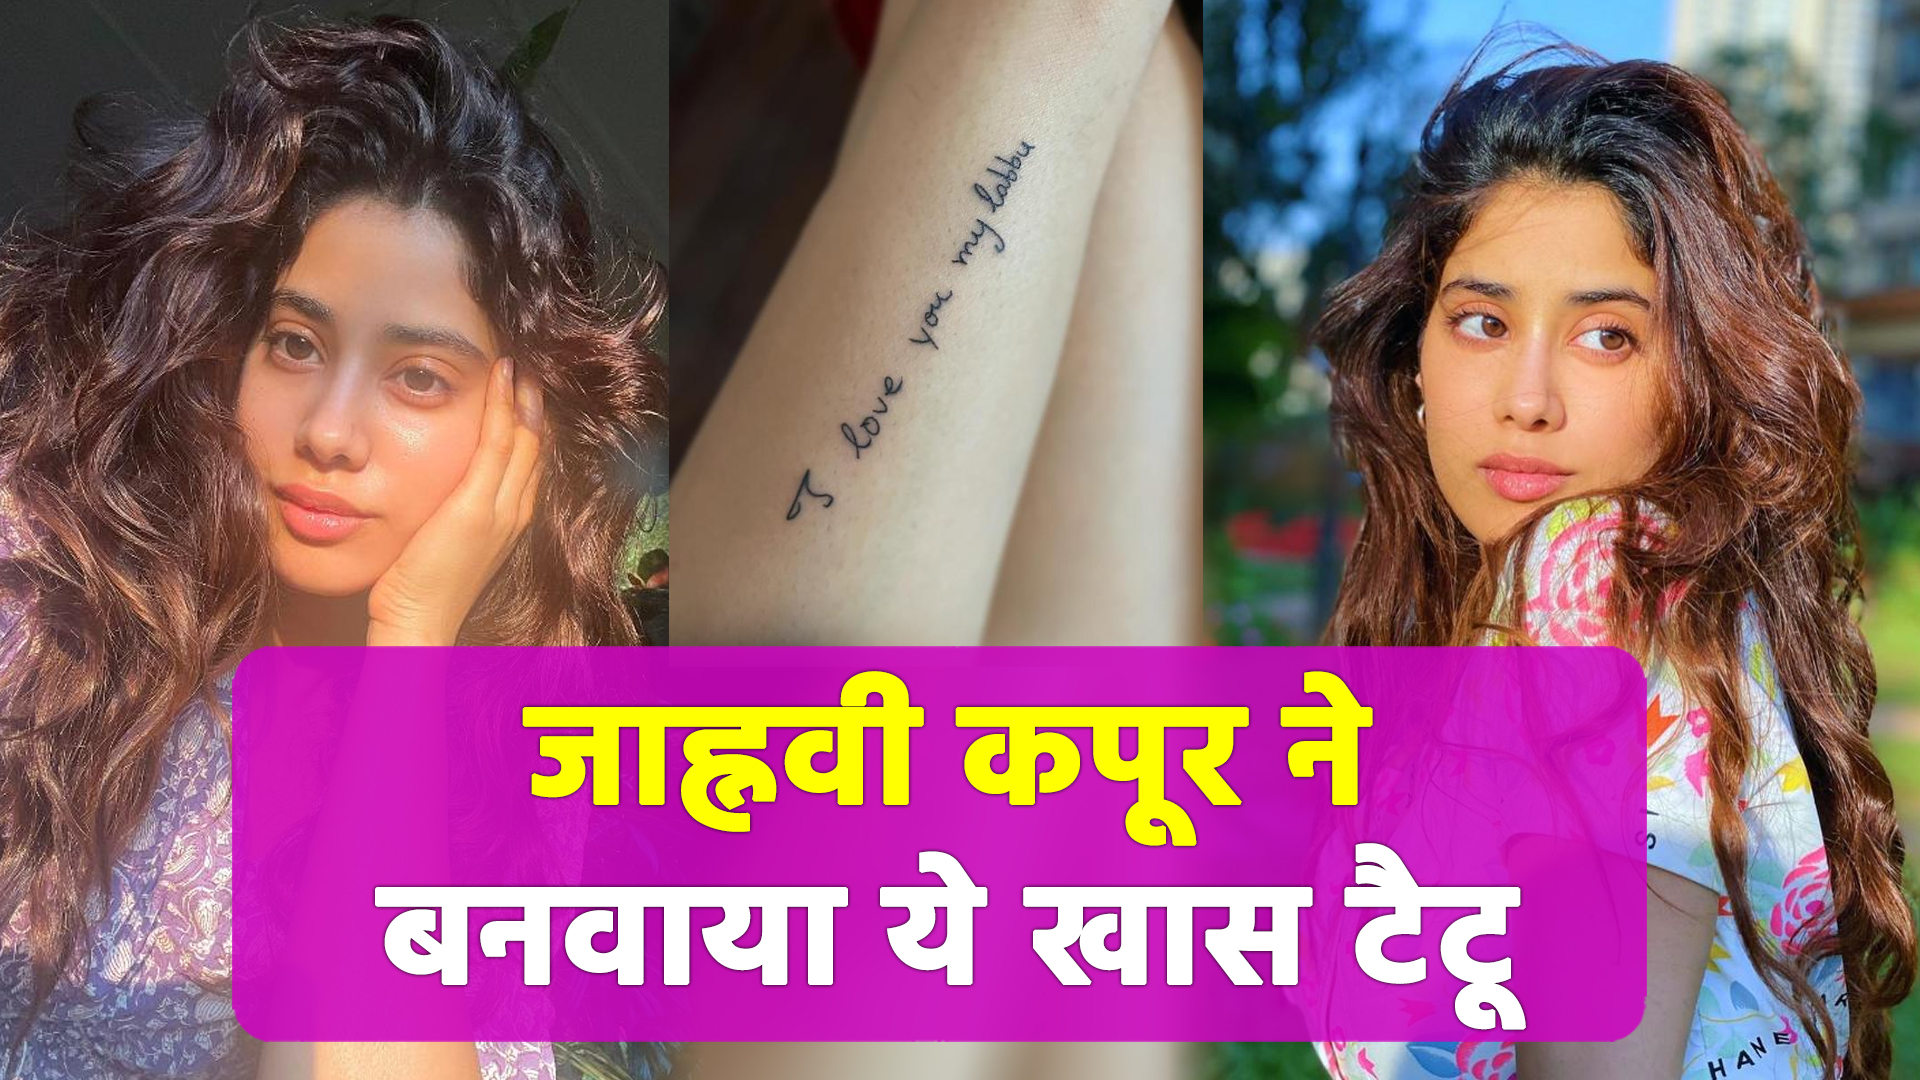 Khushi Kapoor and halfsister Anshula Kapoor get matching tattoos Because  we fit together  Bollywood  Hindustan Times